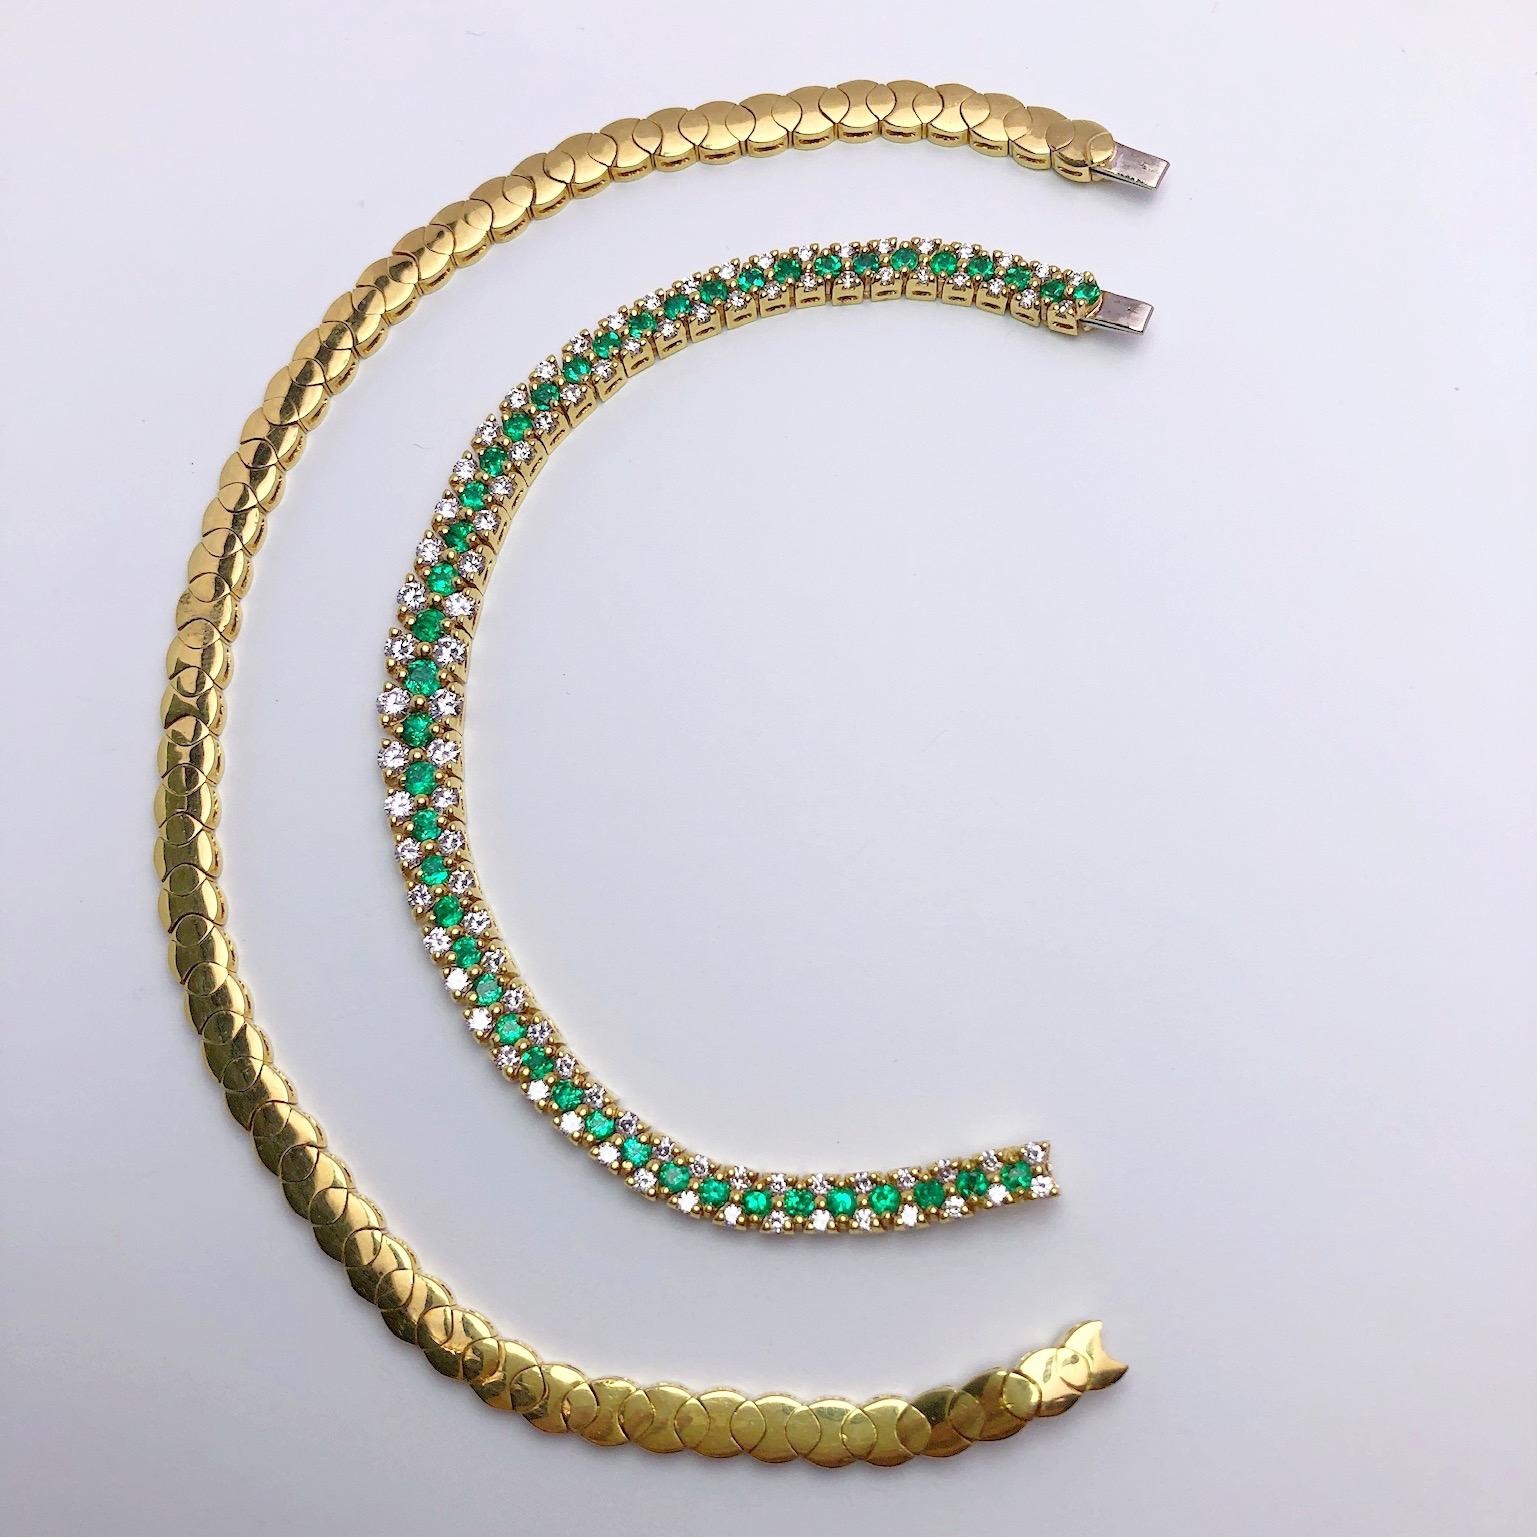 18 Karat Gold 3.68 Carat Emerald and 4.31 Carat Diamond Necklace and Bracelet For Sale 1